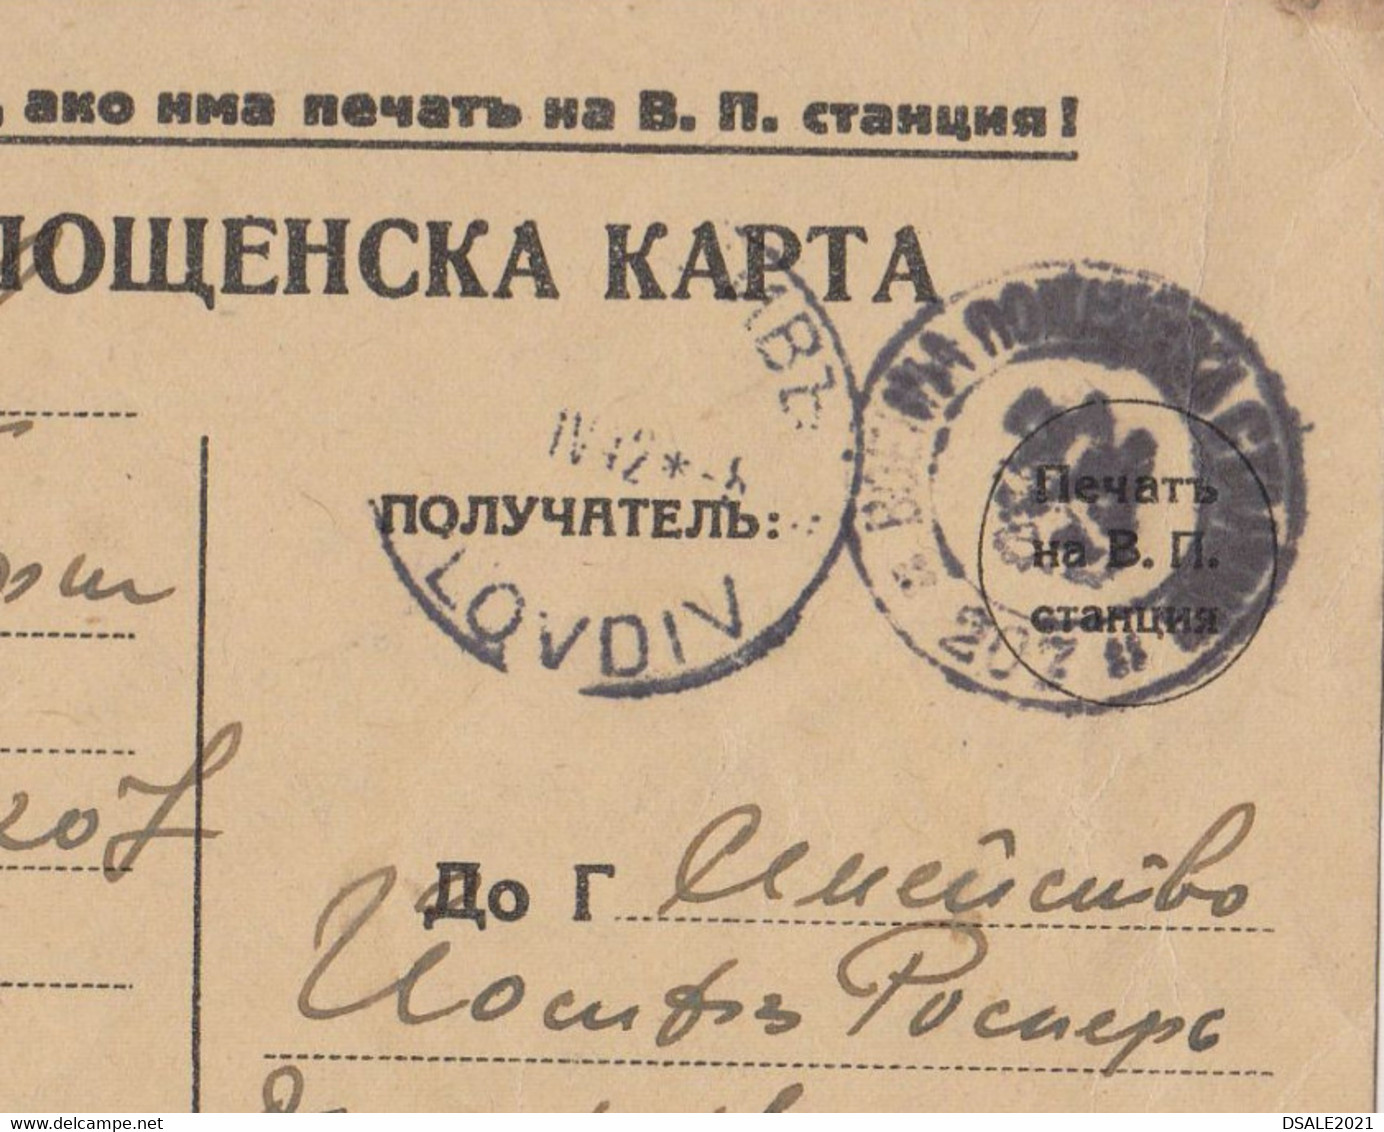 Bulgaria Ww2 Bulgarian Field Military Formula Card Military Post No207 Cachet 1942 Sent To Plovdiv (56087) - War